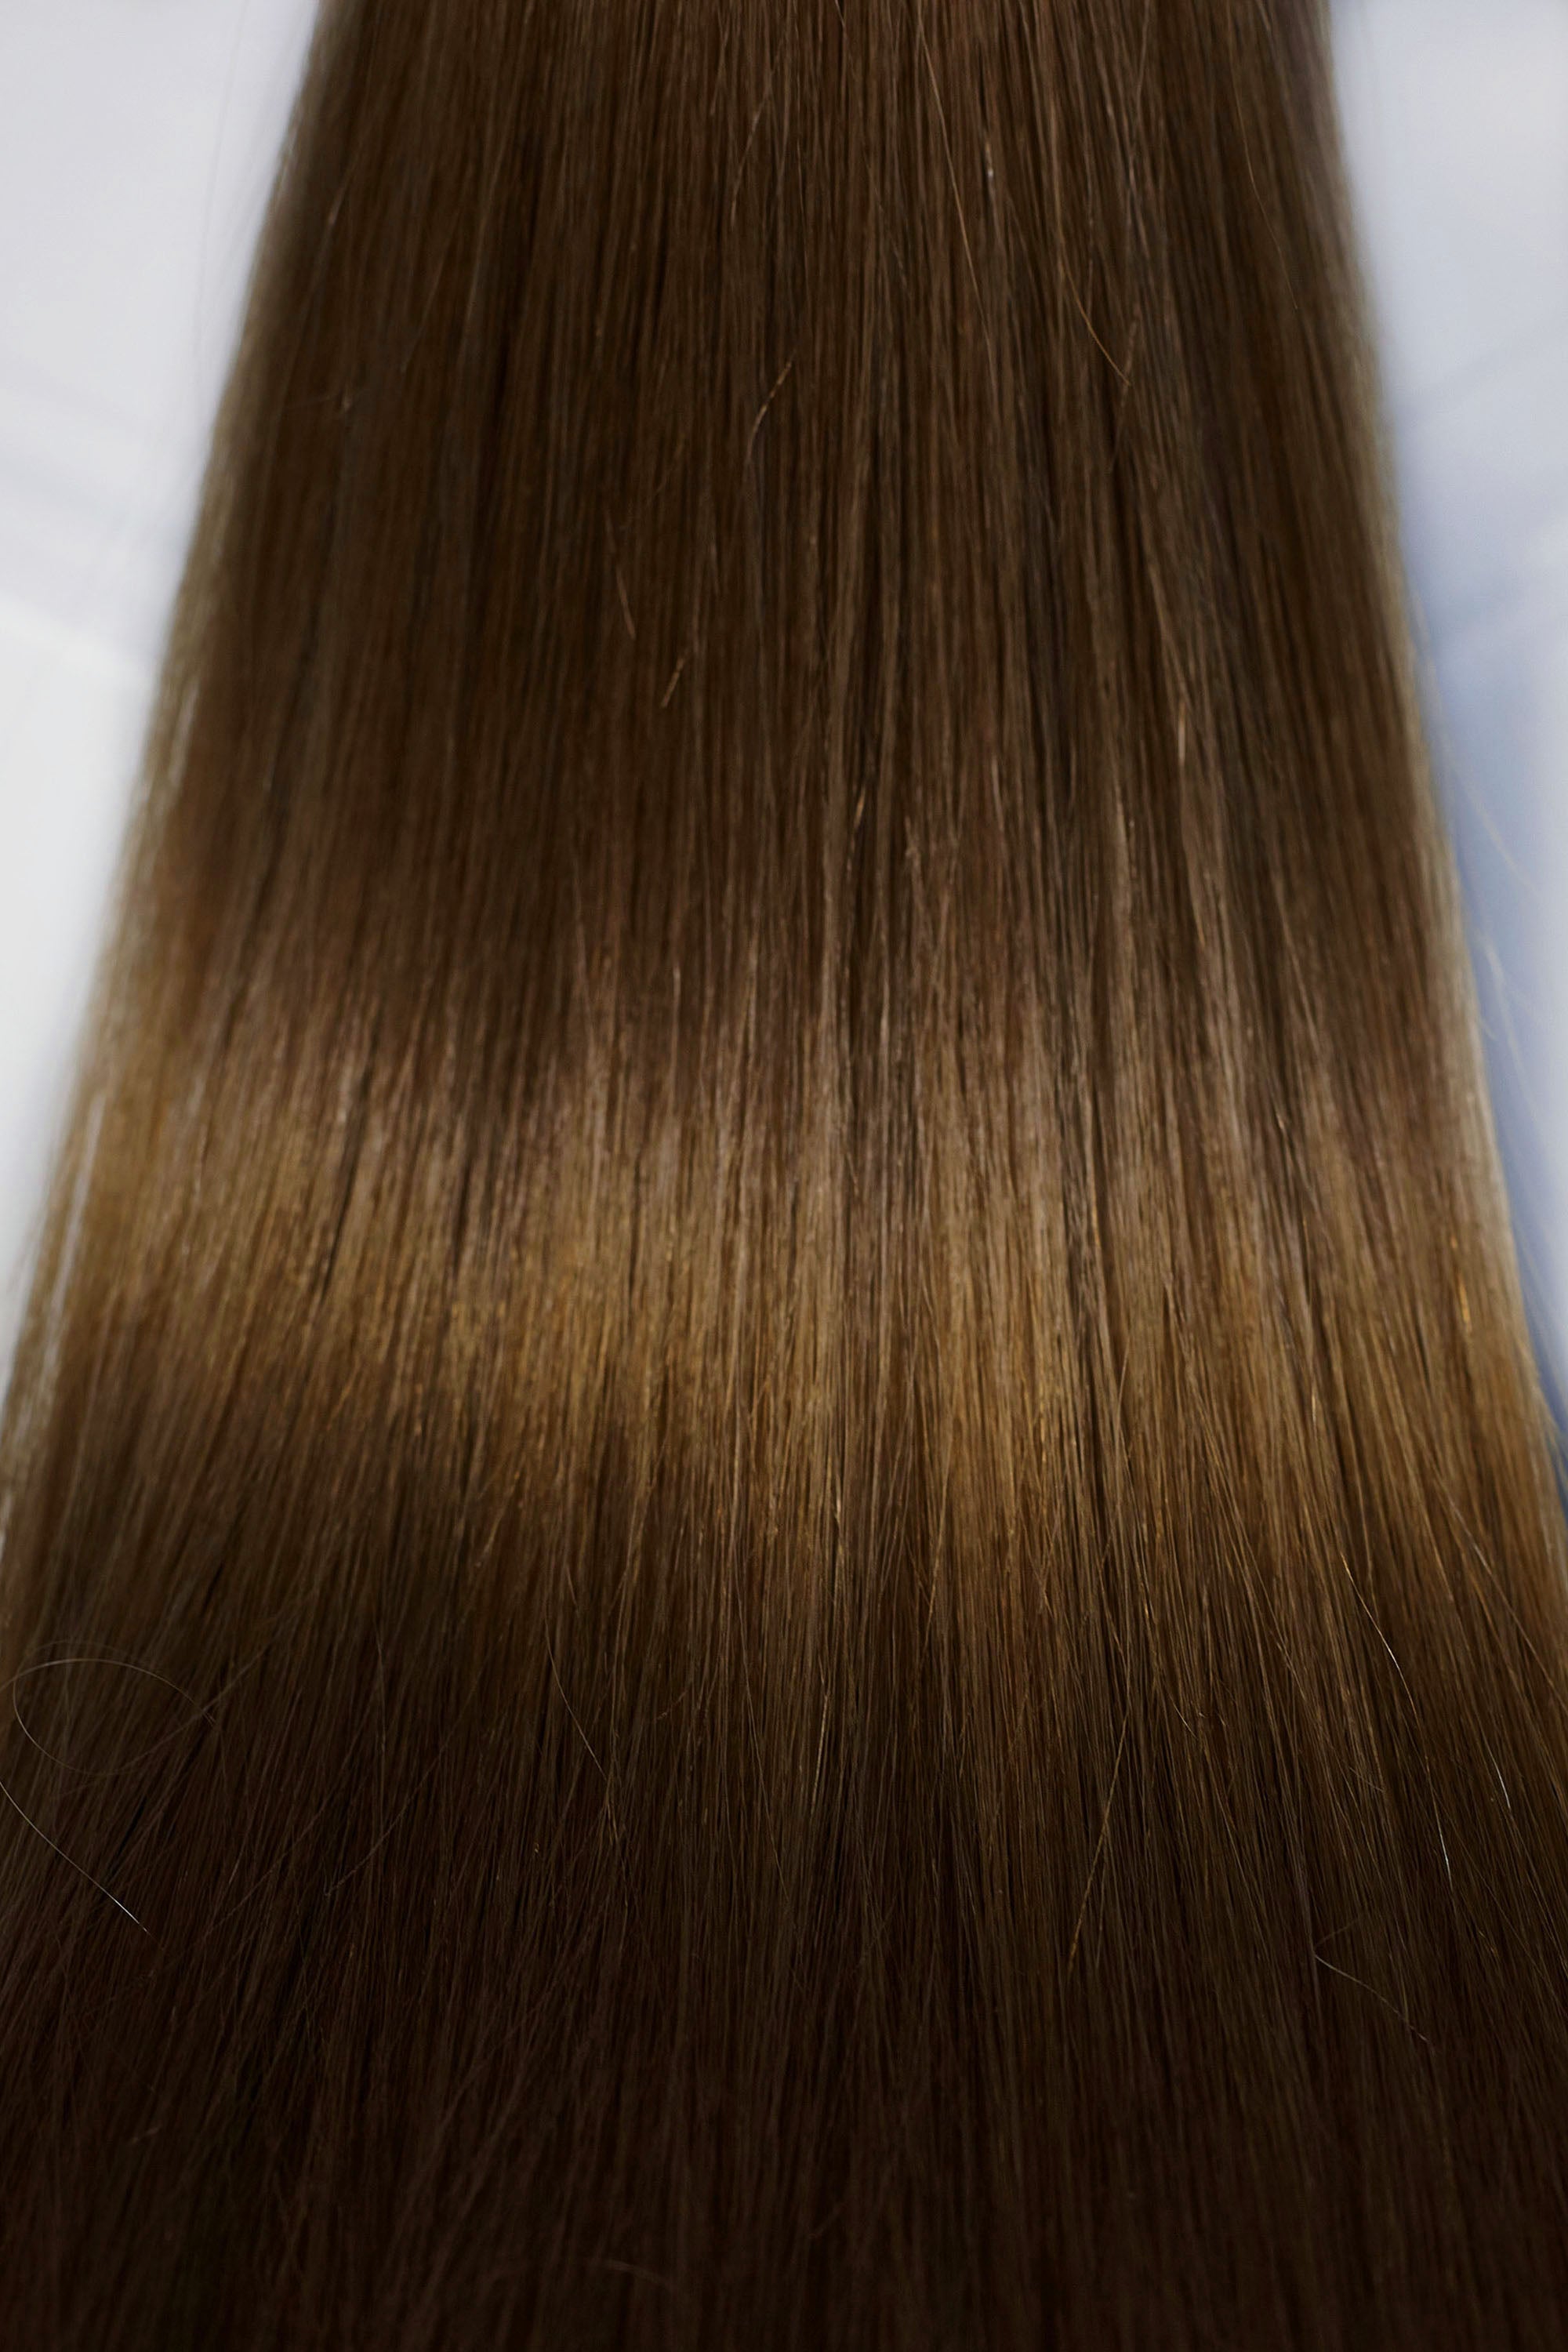 Behair professional Keratin Tip "Premium" 20" (50cm) Natural Straight Honey Walnut Brown #5 - 25g (1g each pcs) hair extensions